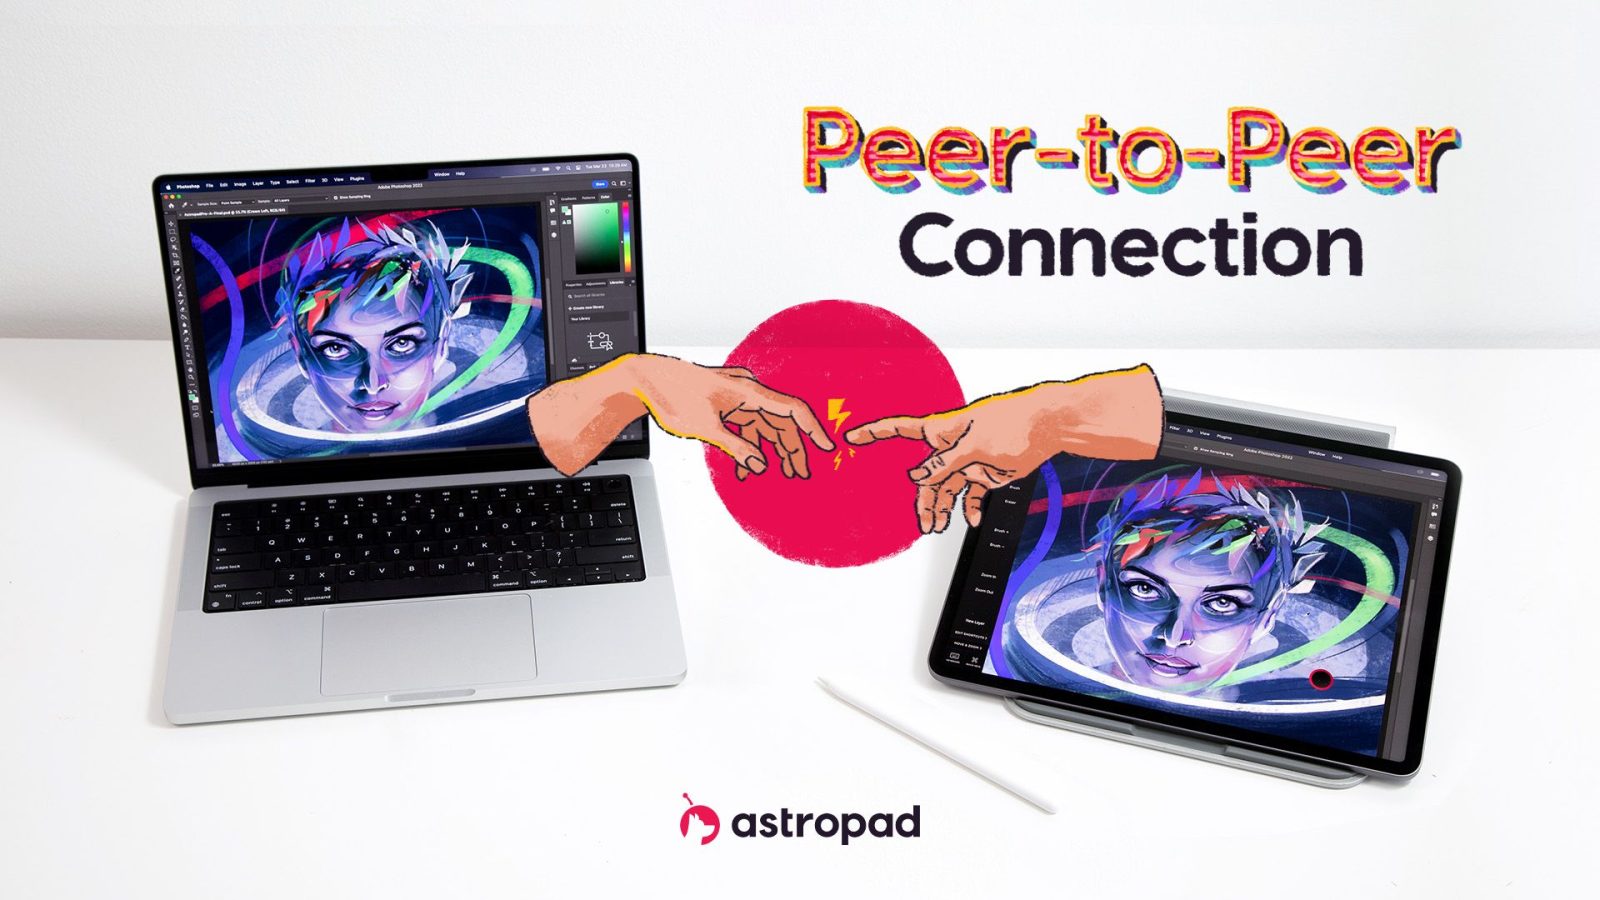 Astropad Studio peer-to-peer connection